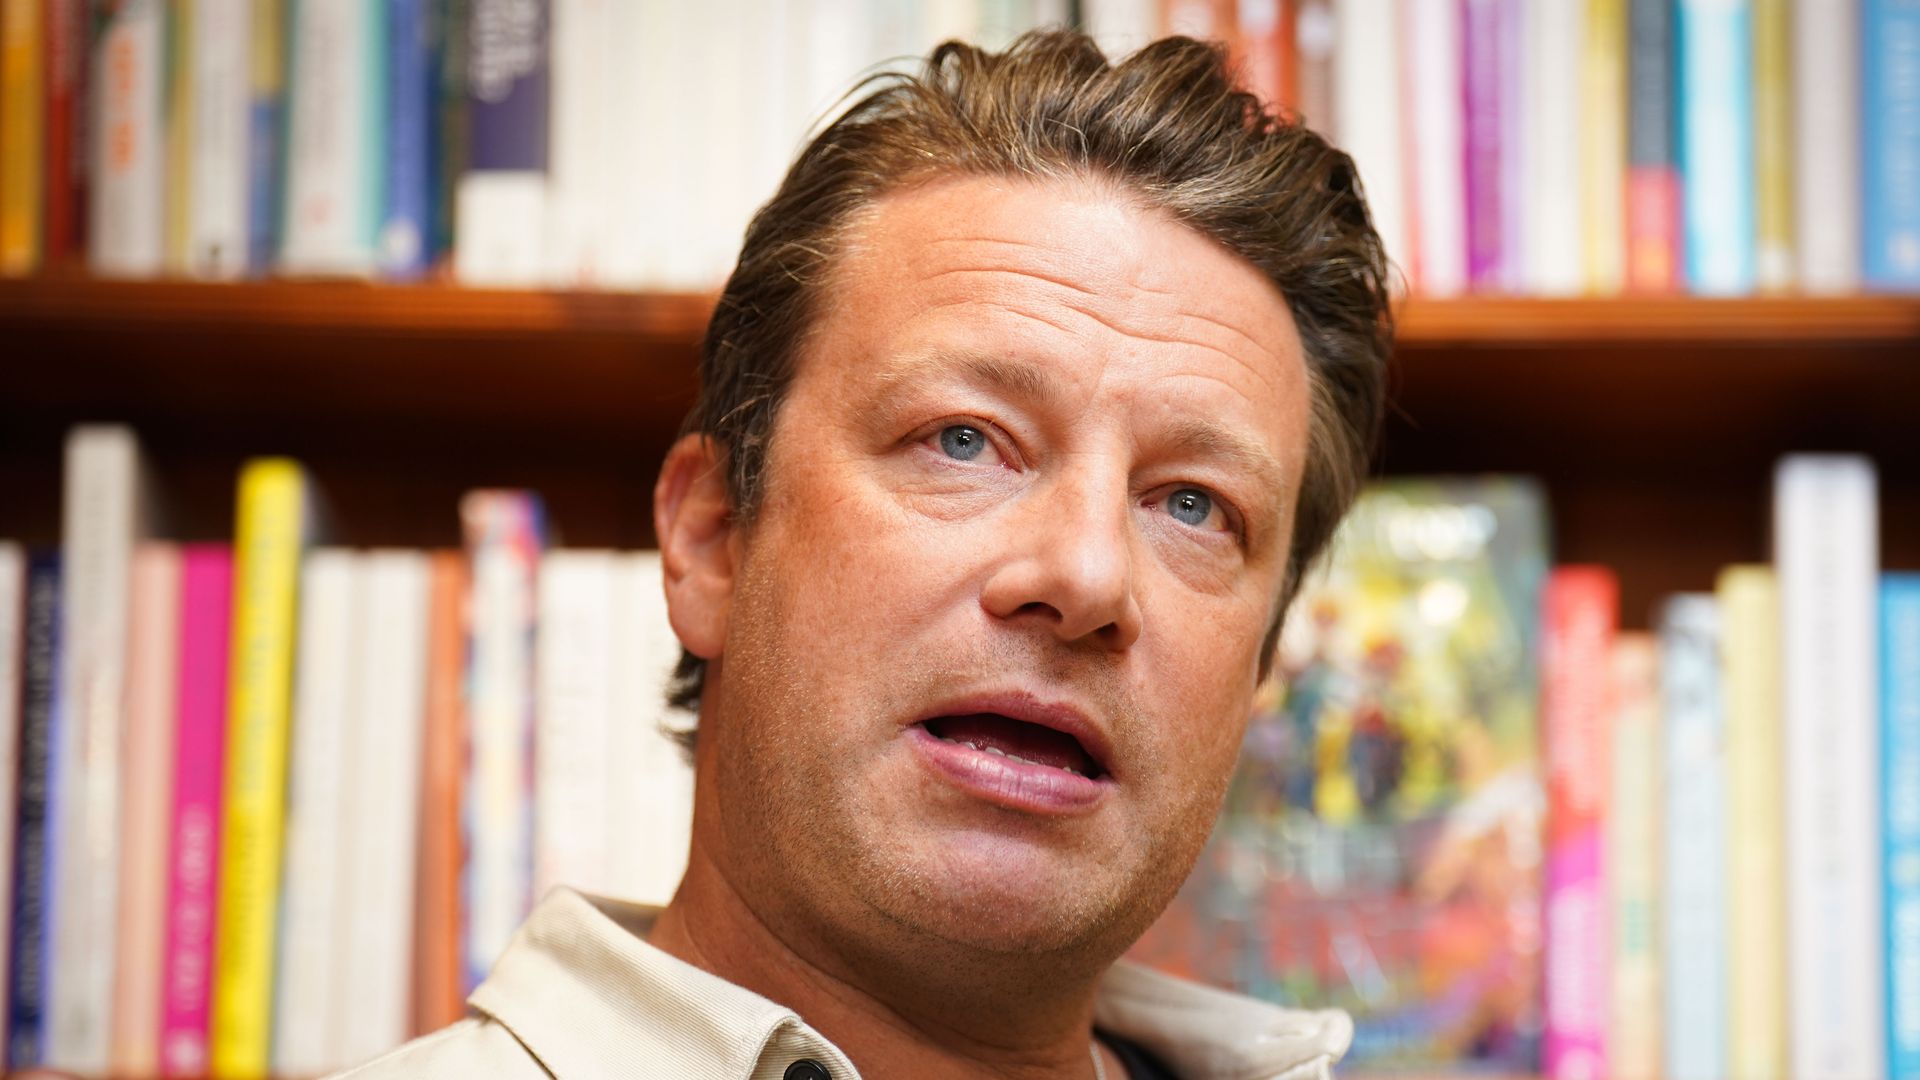 Jamie Oliver talks at local independent bookshop